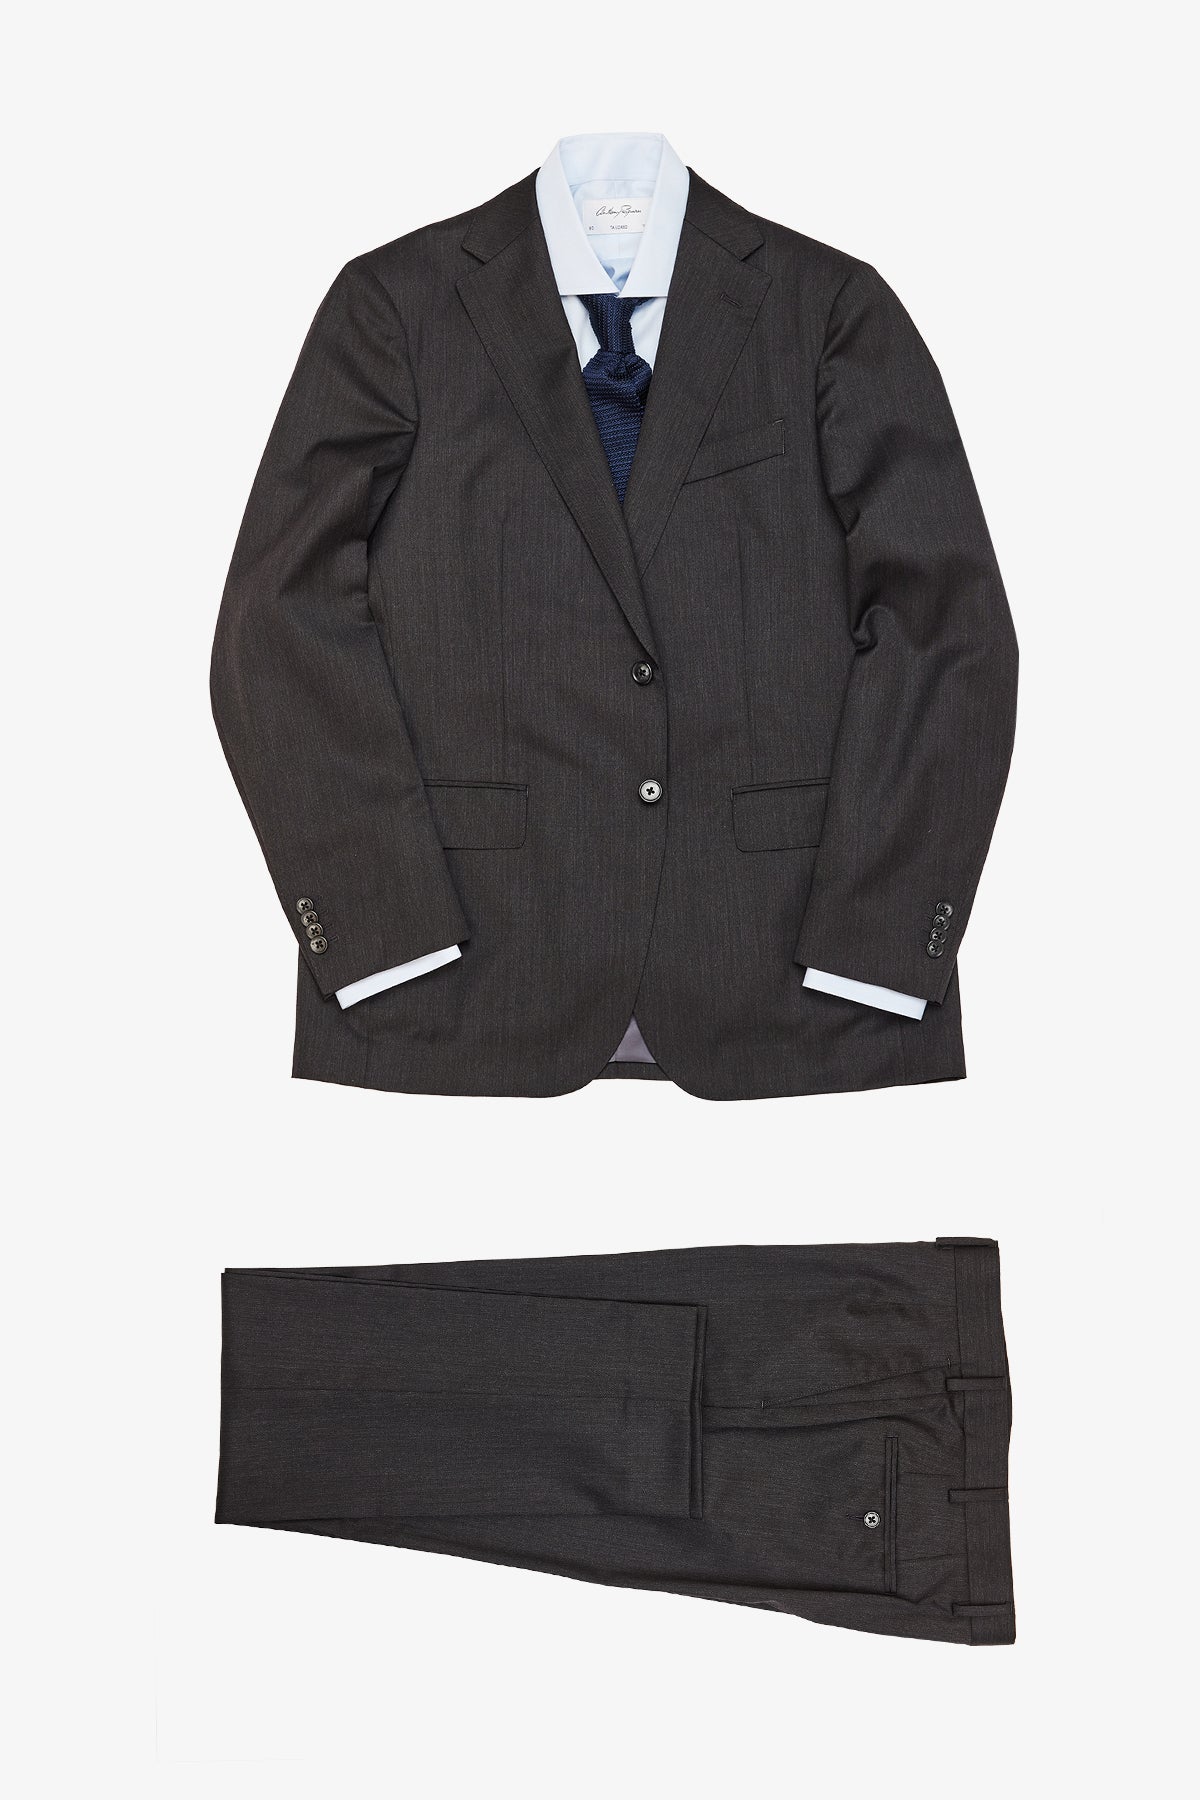 Ives - Charcoal Suit